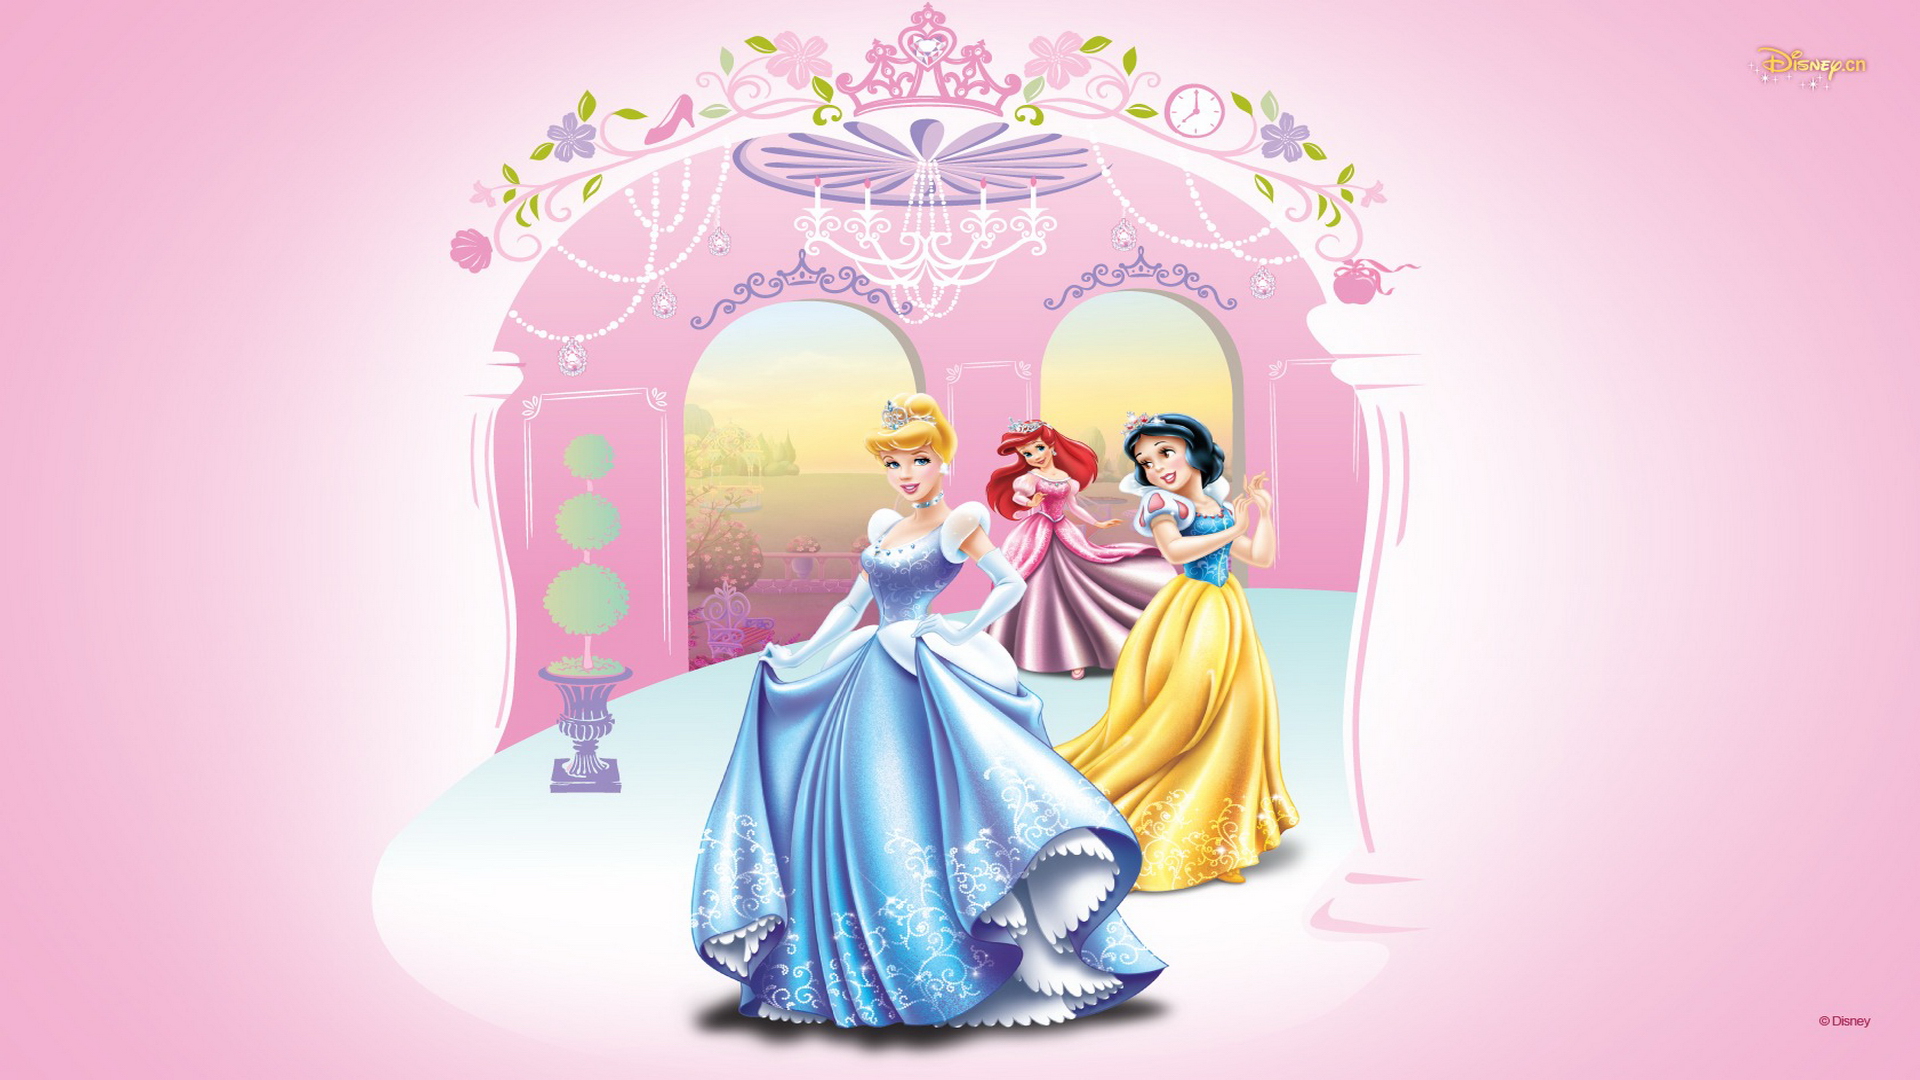 Disney princess wallpaper